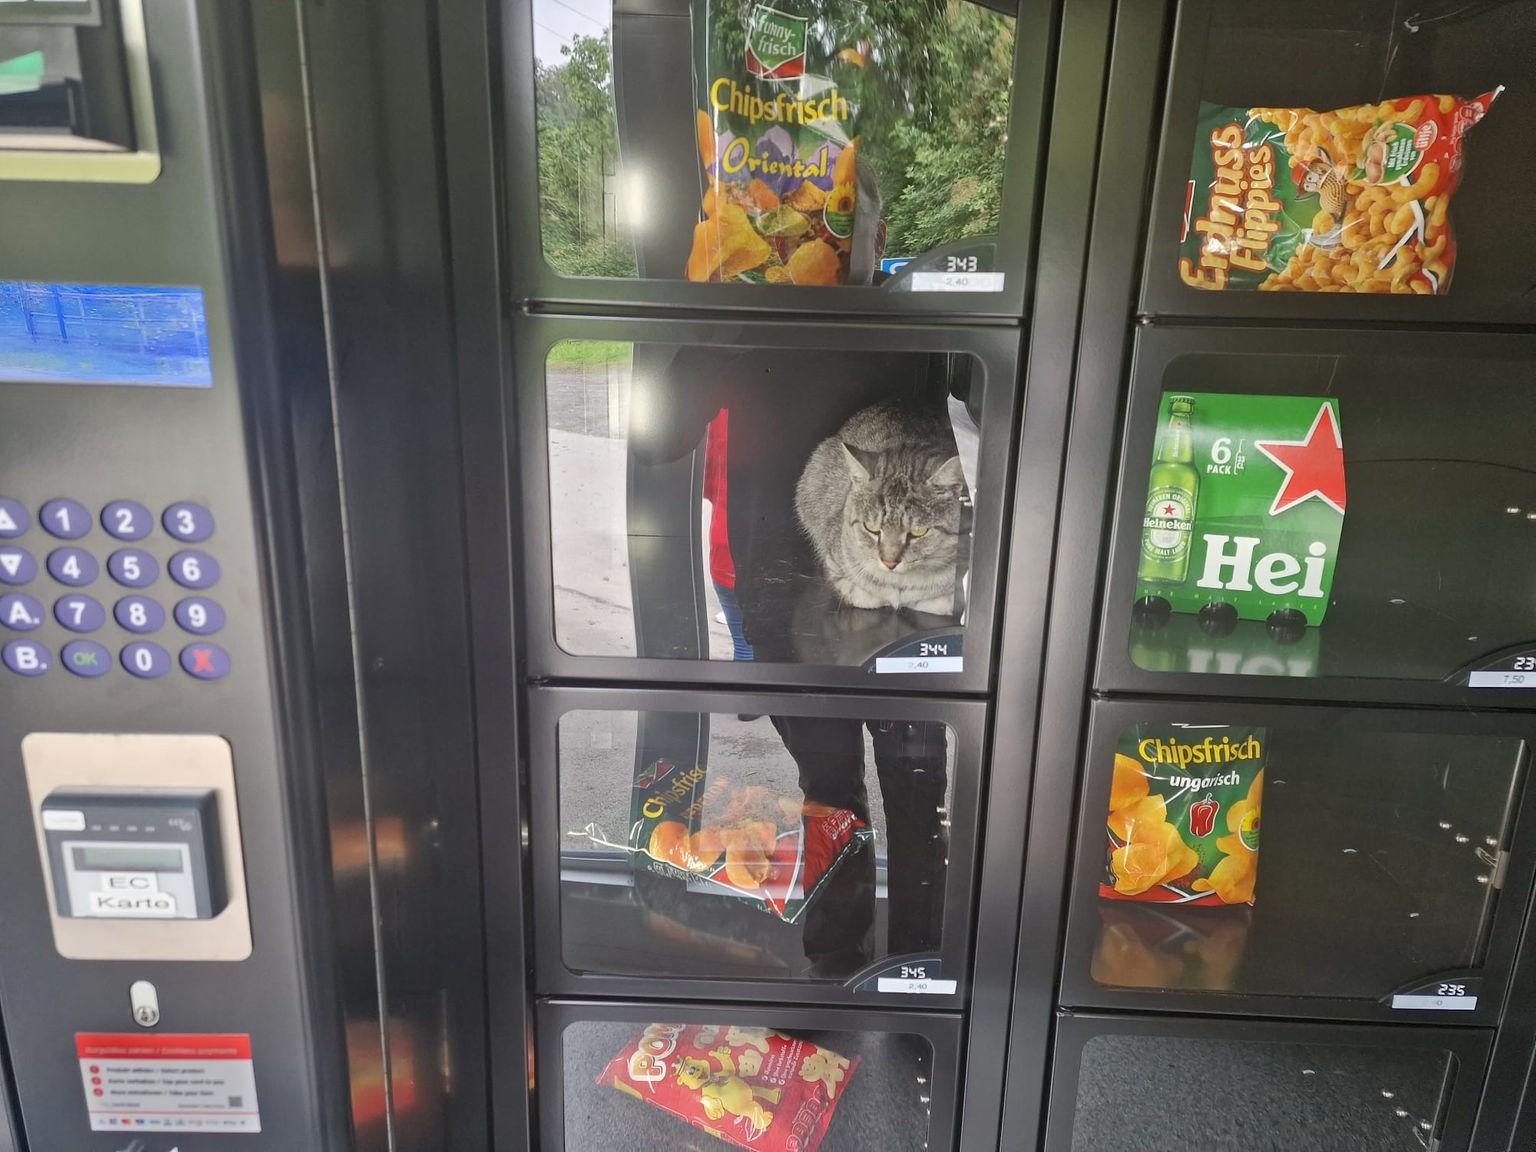 Katze im Lebensmittelautomaten eingesperrt - Westfalen-Lippe - Nachrichten  - WDR